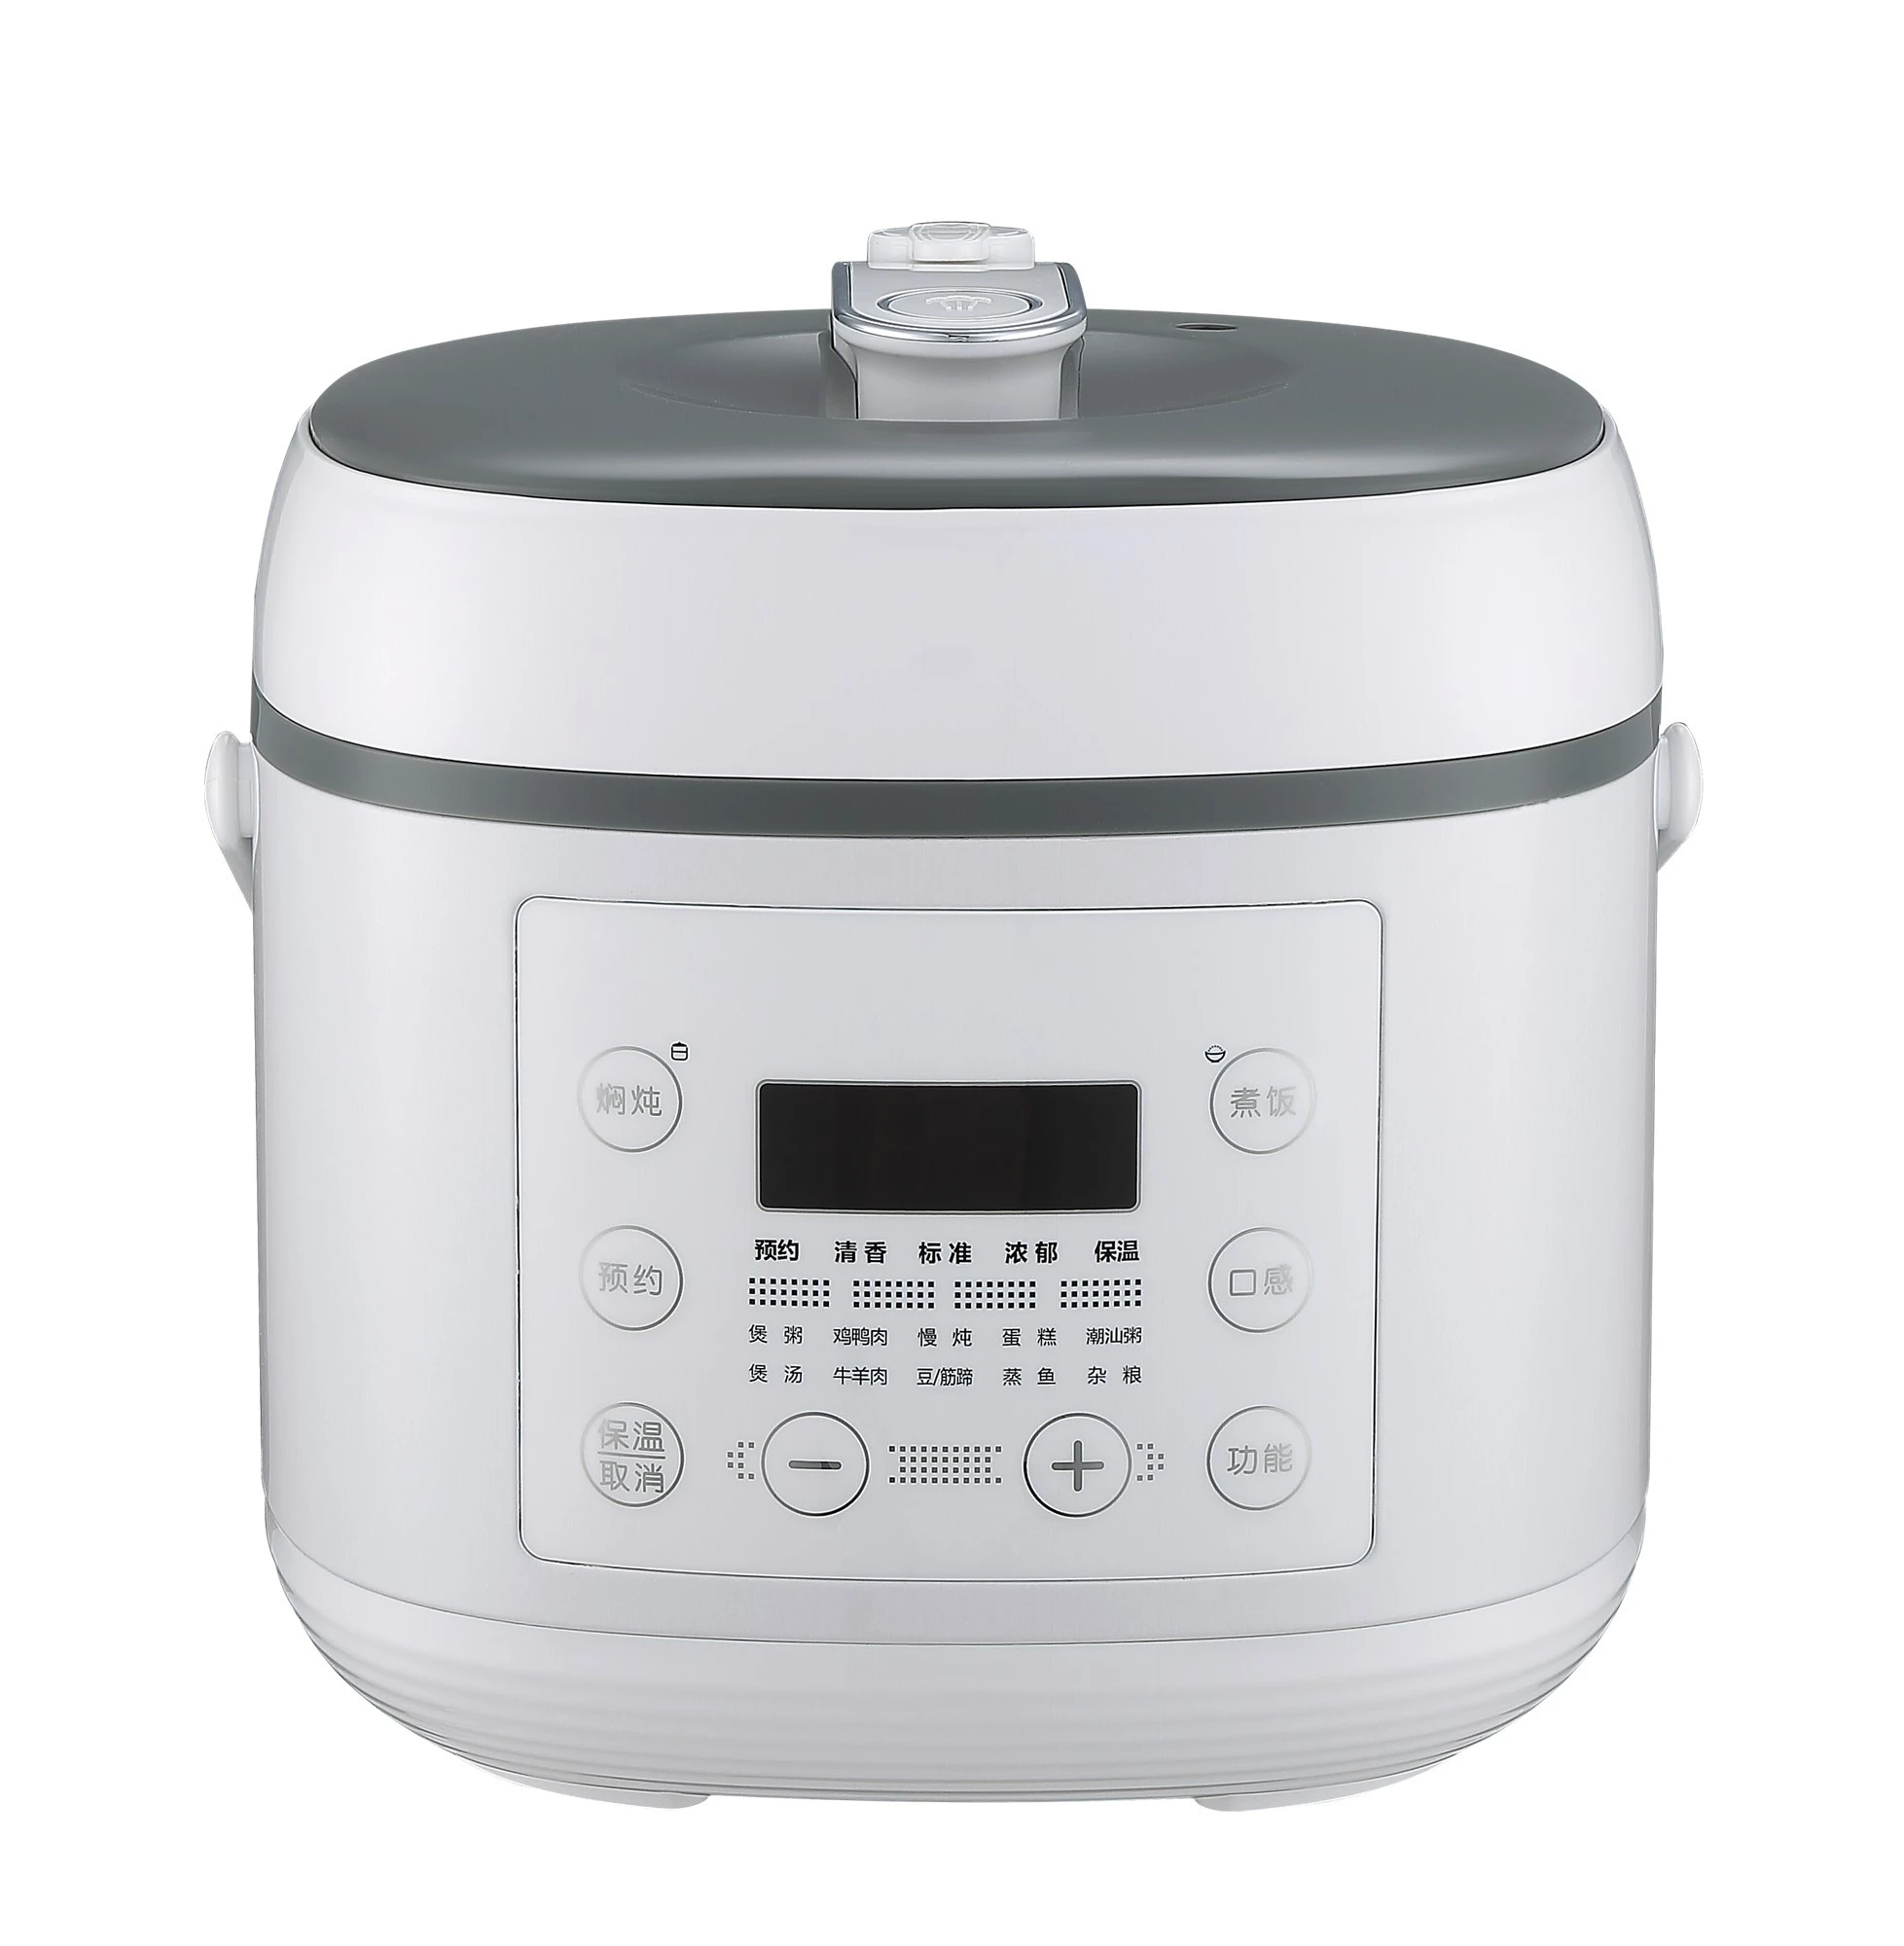 7-in-1 6Qt Instants Programmable Pot Stainless Steel pot Electric Pressure Cooker Pressure Adjust Multi Cooker